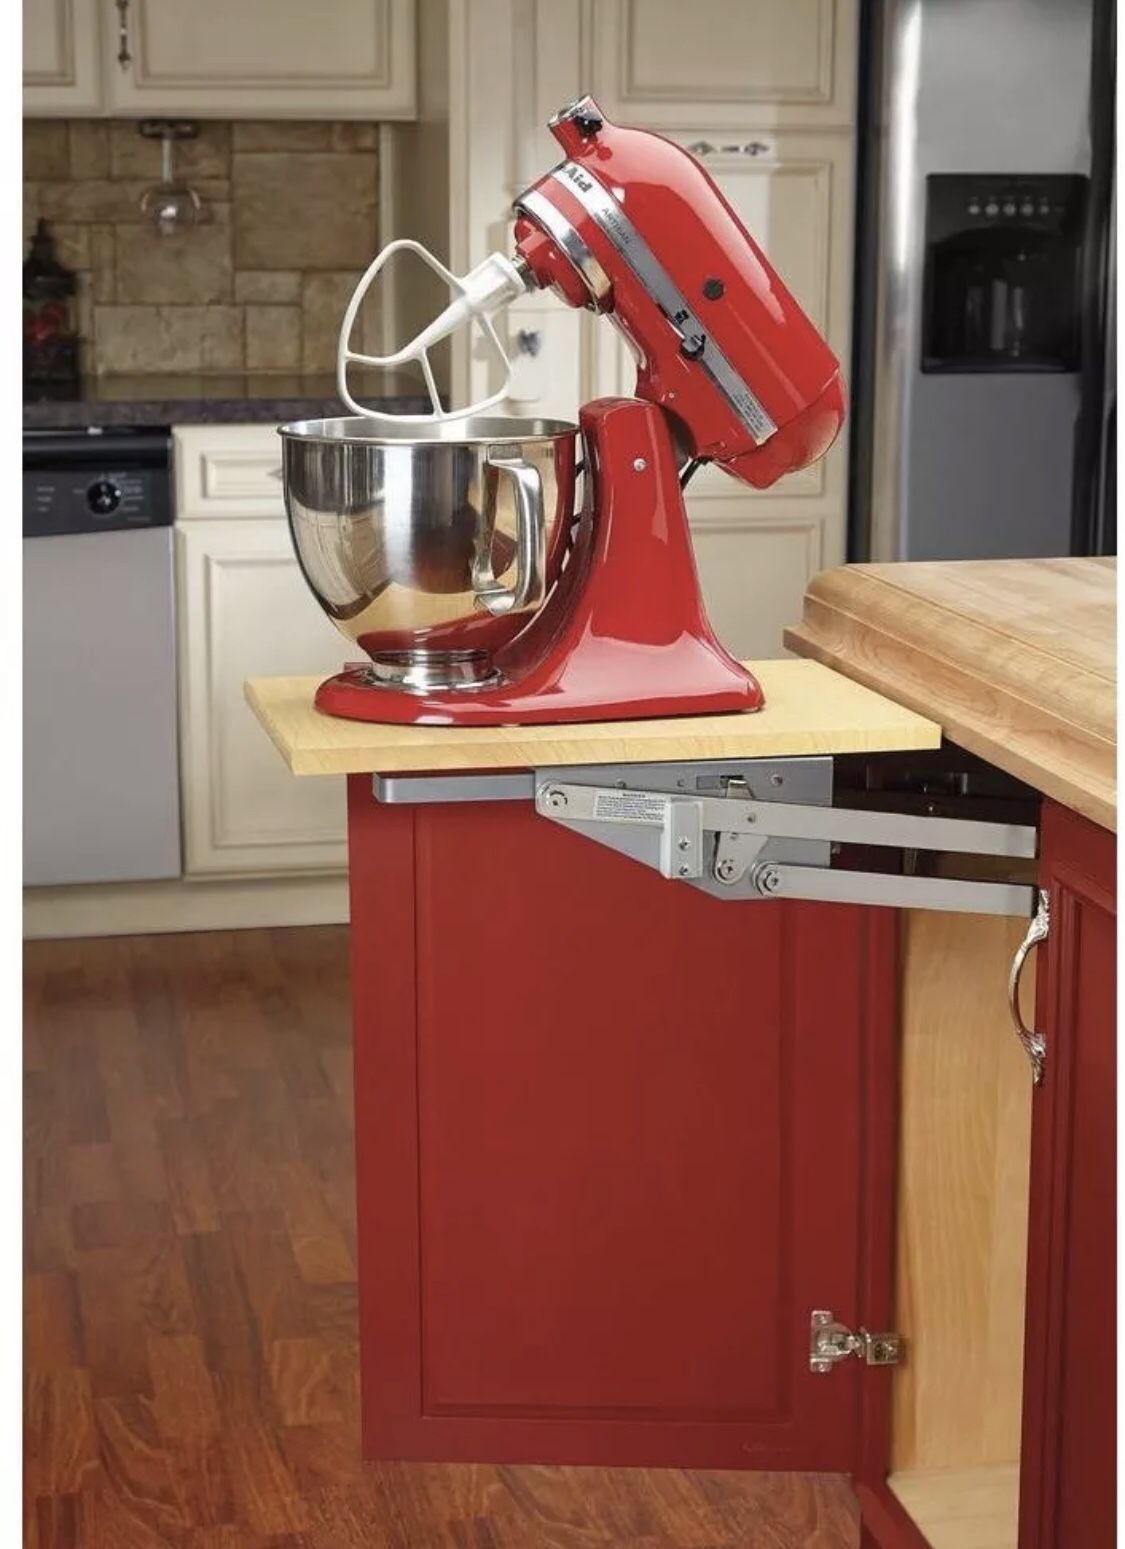 Rev-A-Shelf heavy duty lift system for kitchen aid or appliances